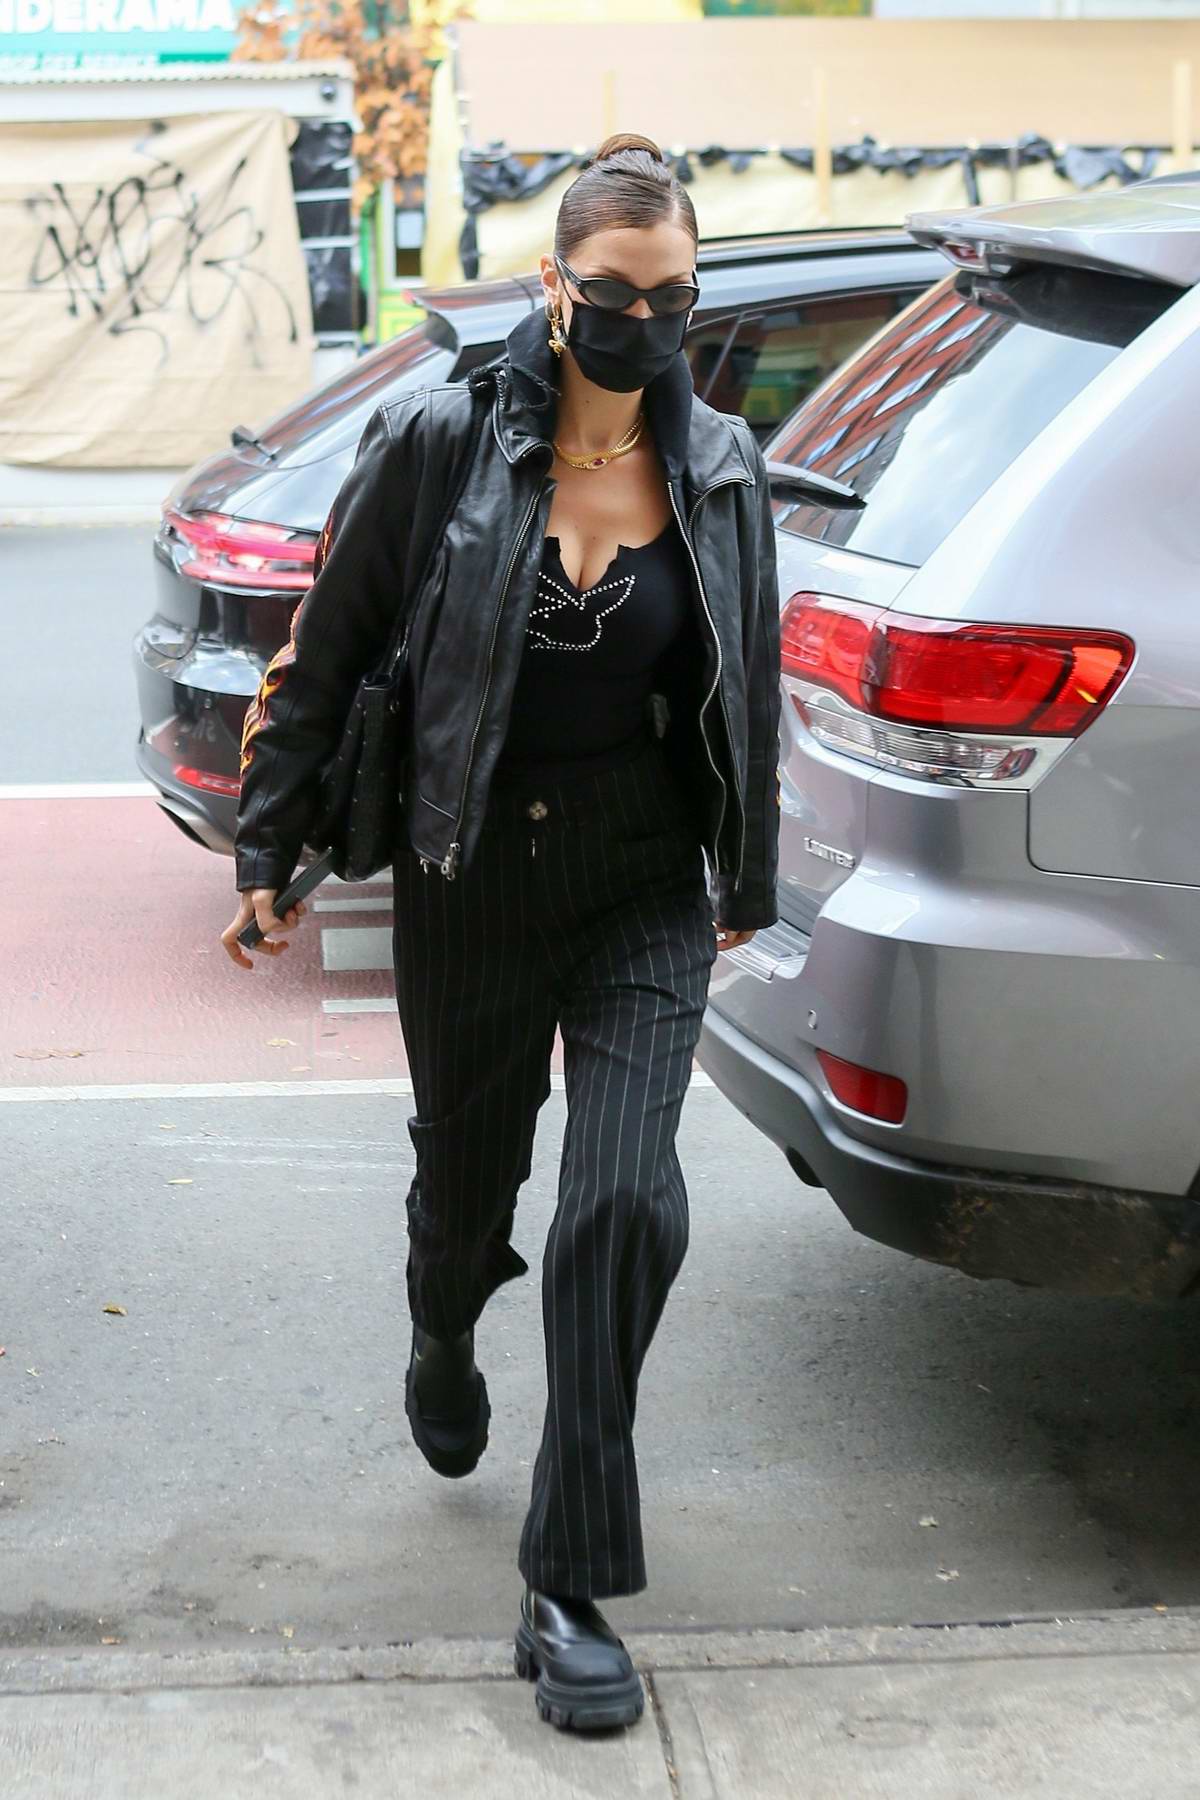 Model Bella Hadid is seen wearing Chanel bag, checkered scarf